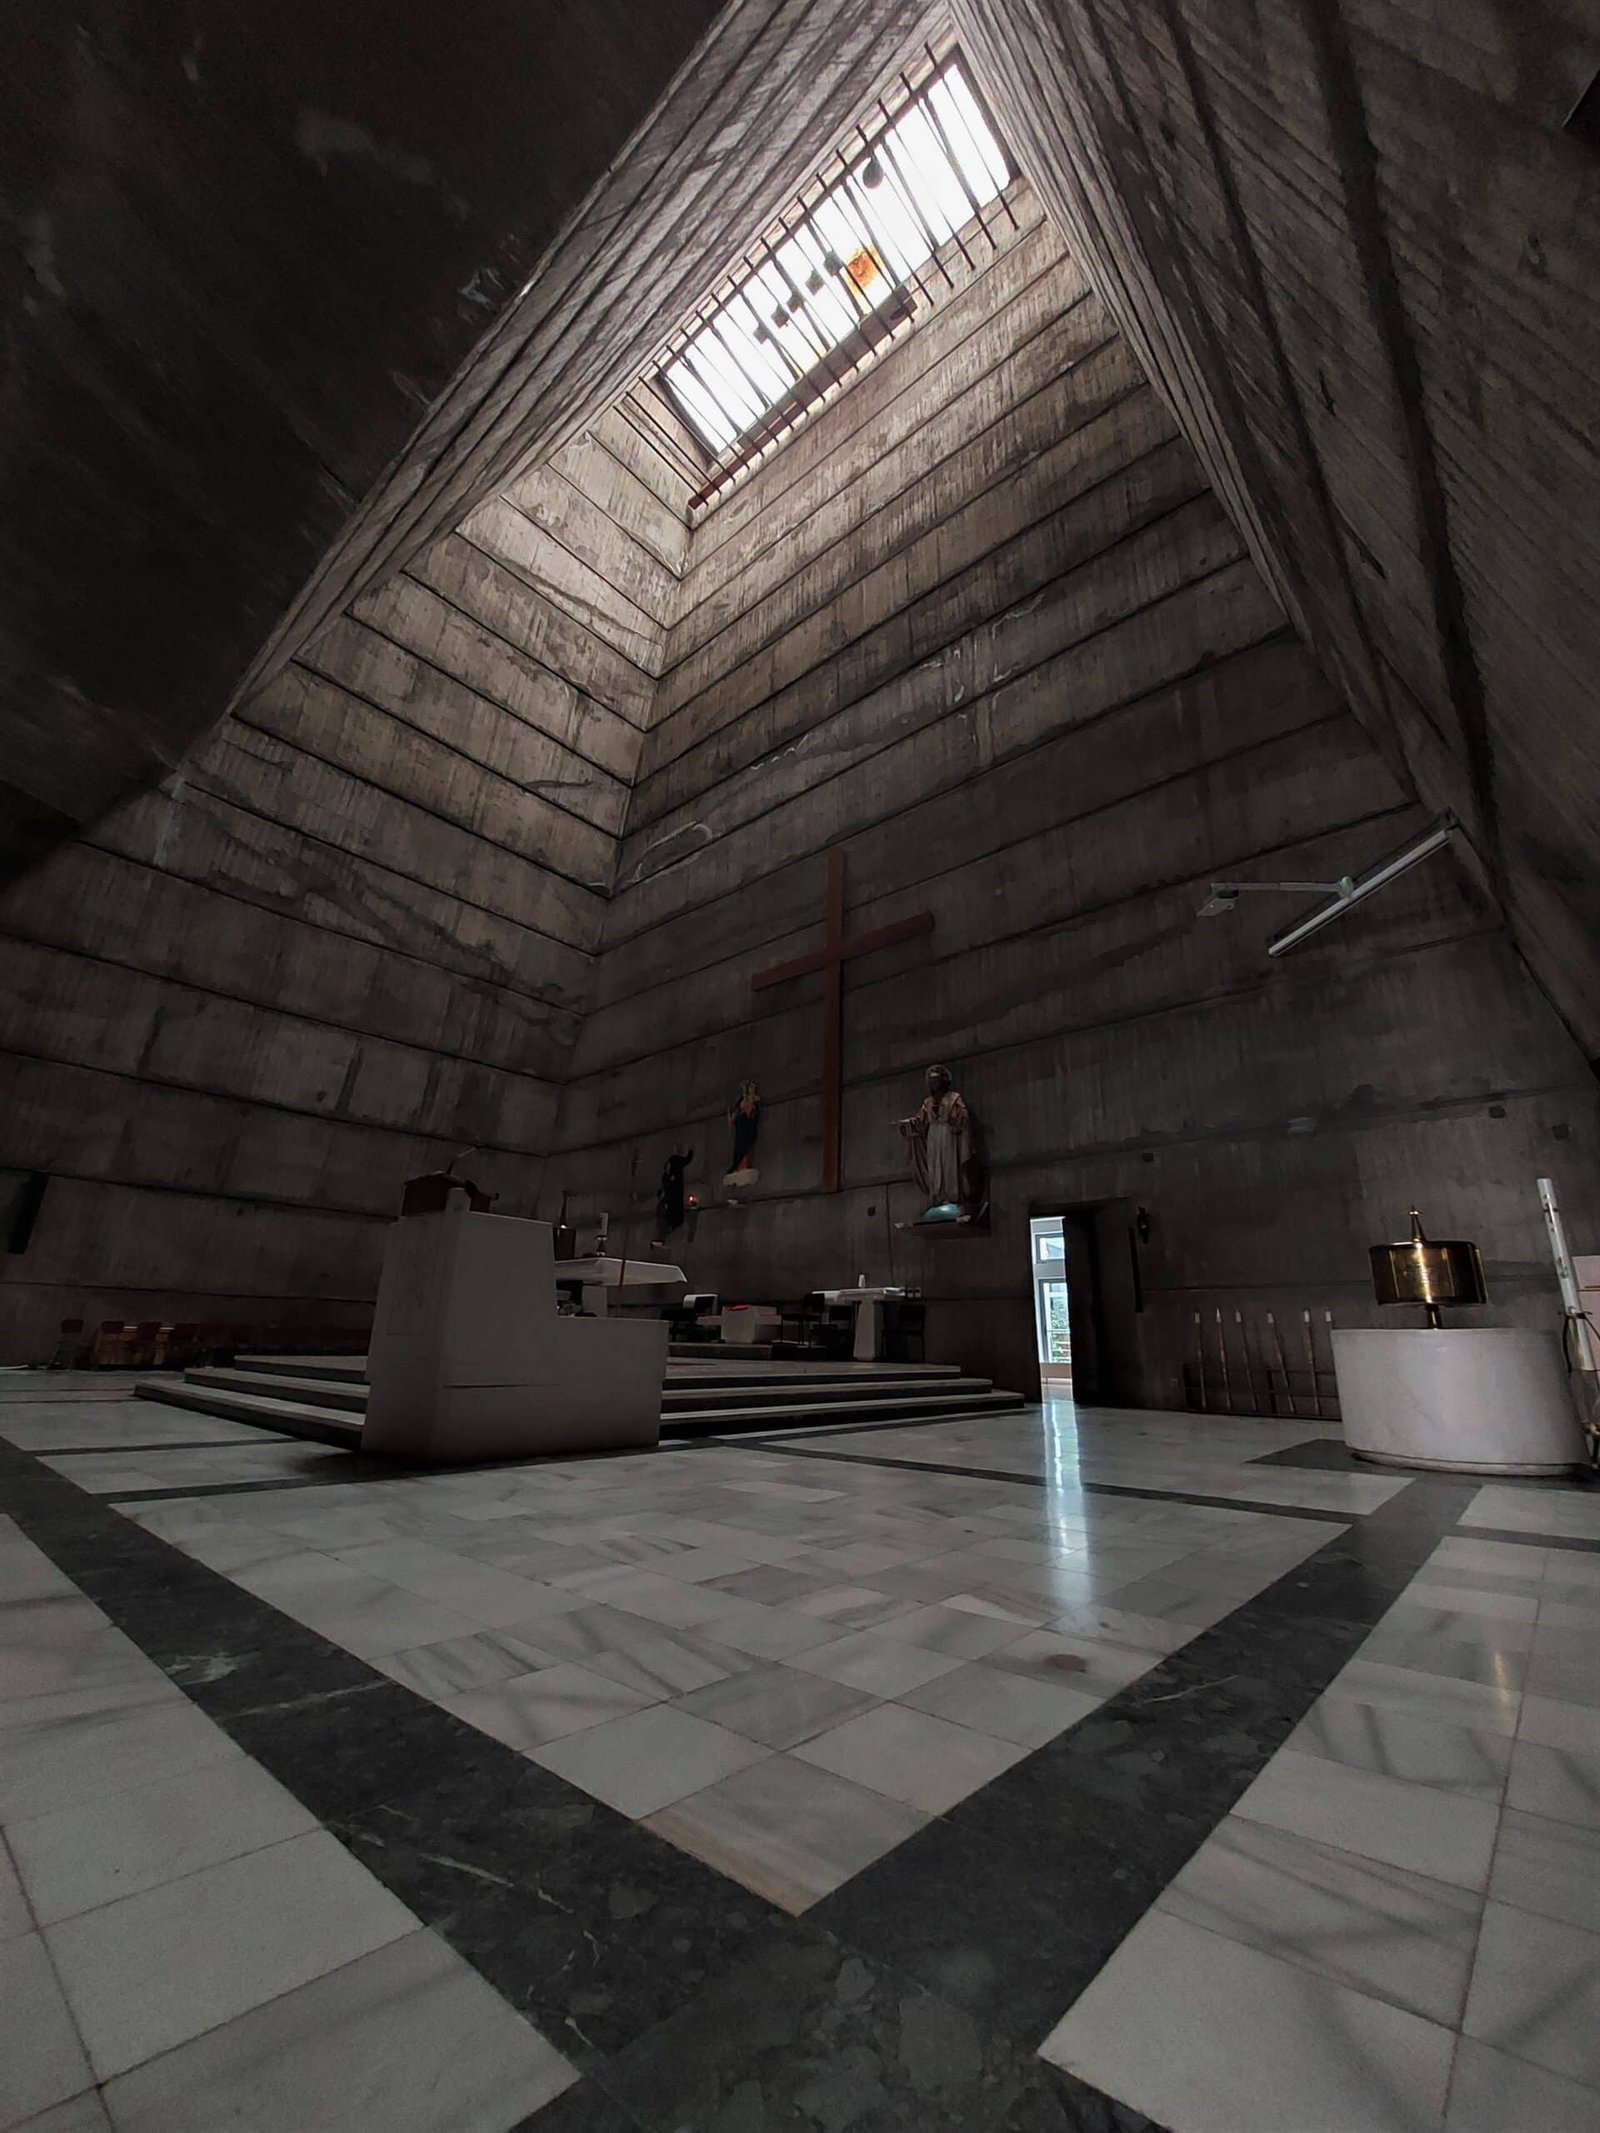 light beams fall through a skylight onto the altar of a catholic church built in the brutalist style